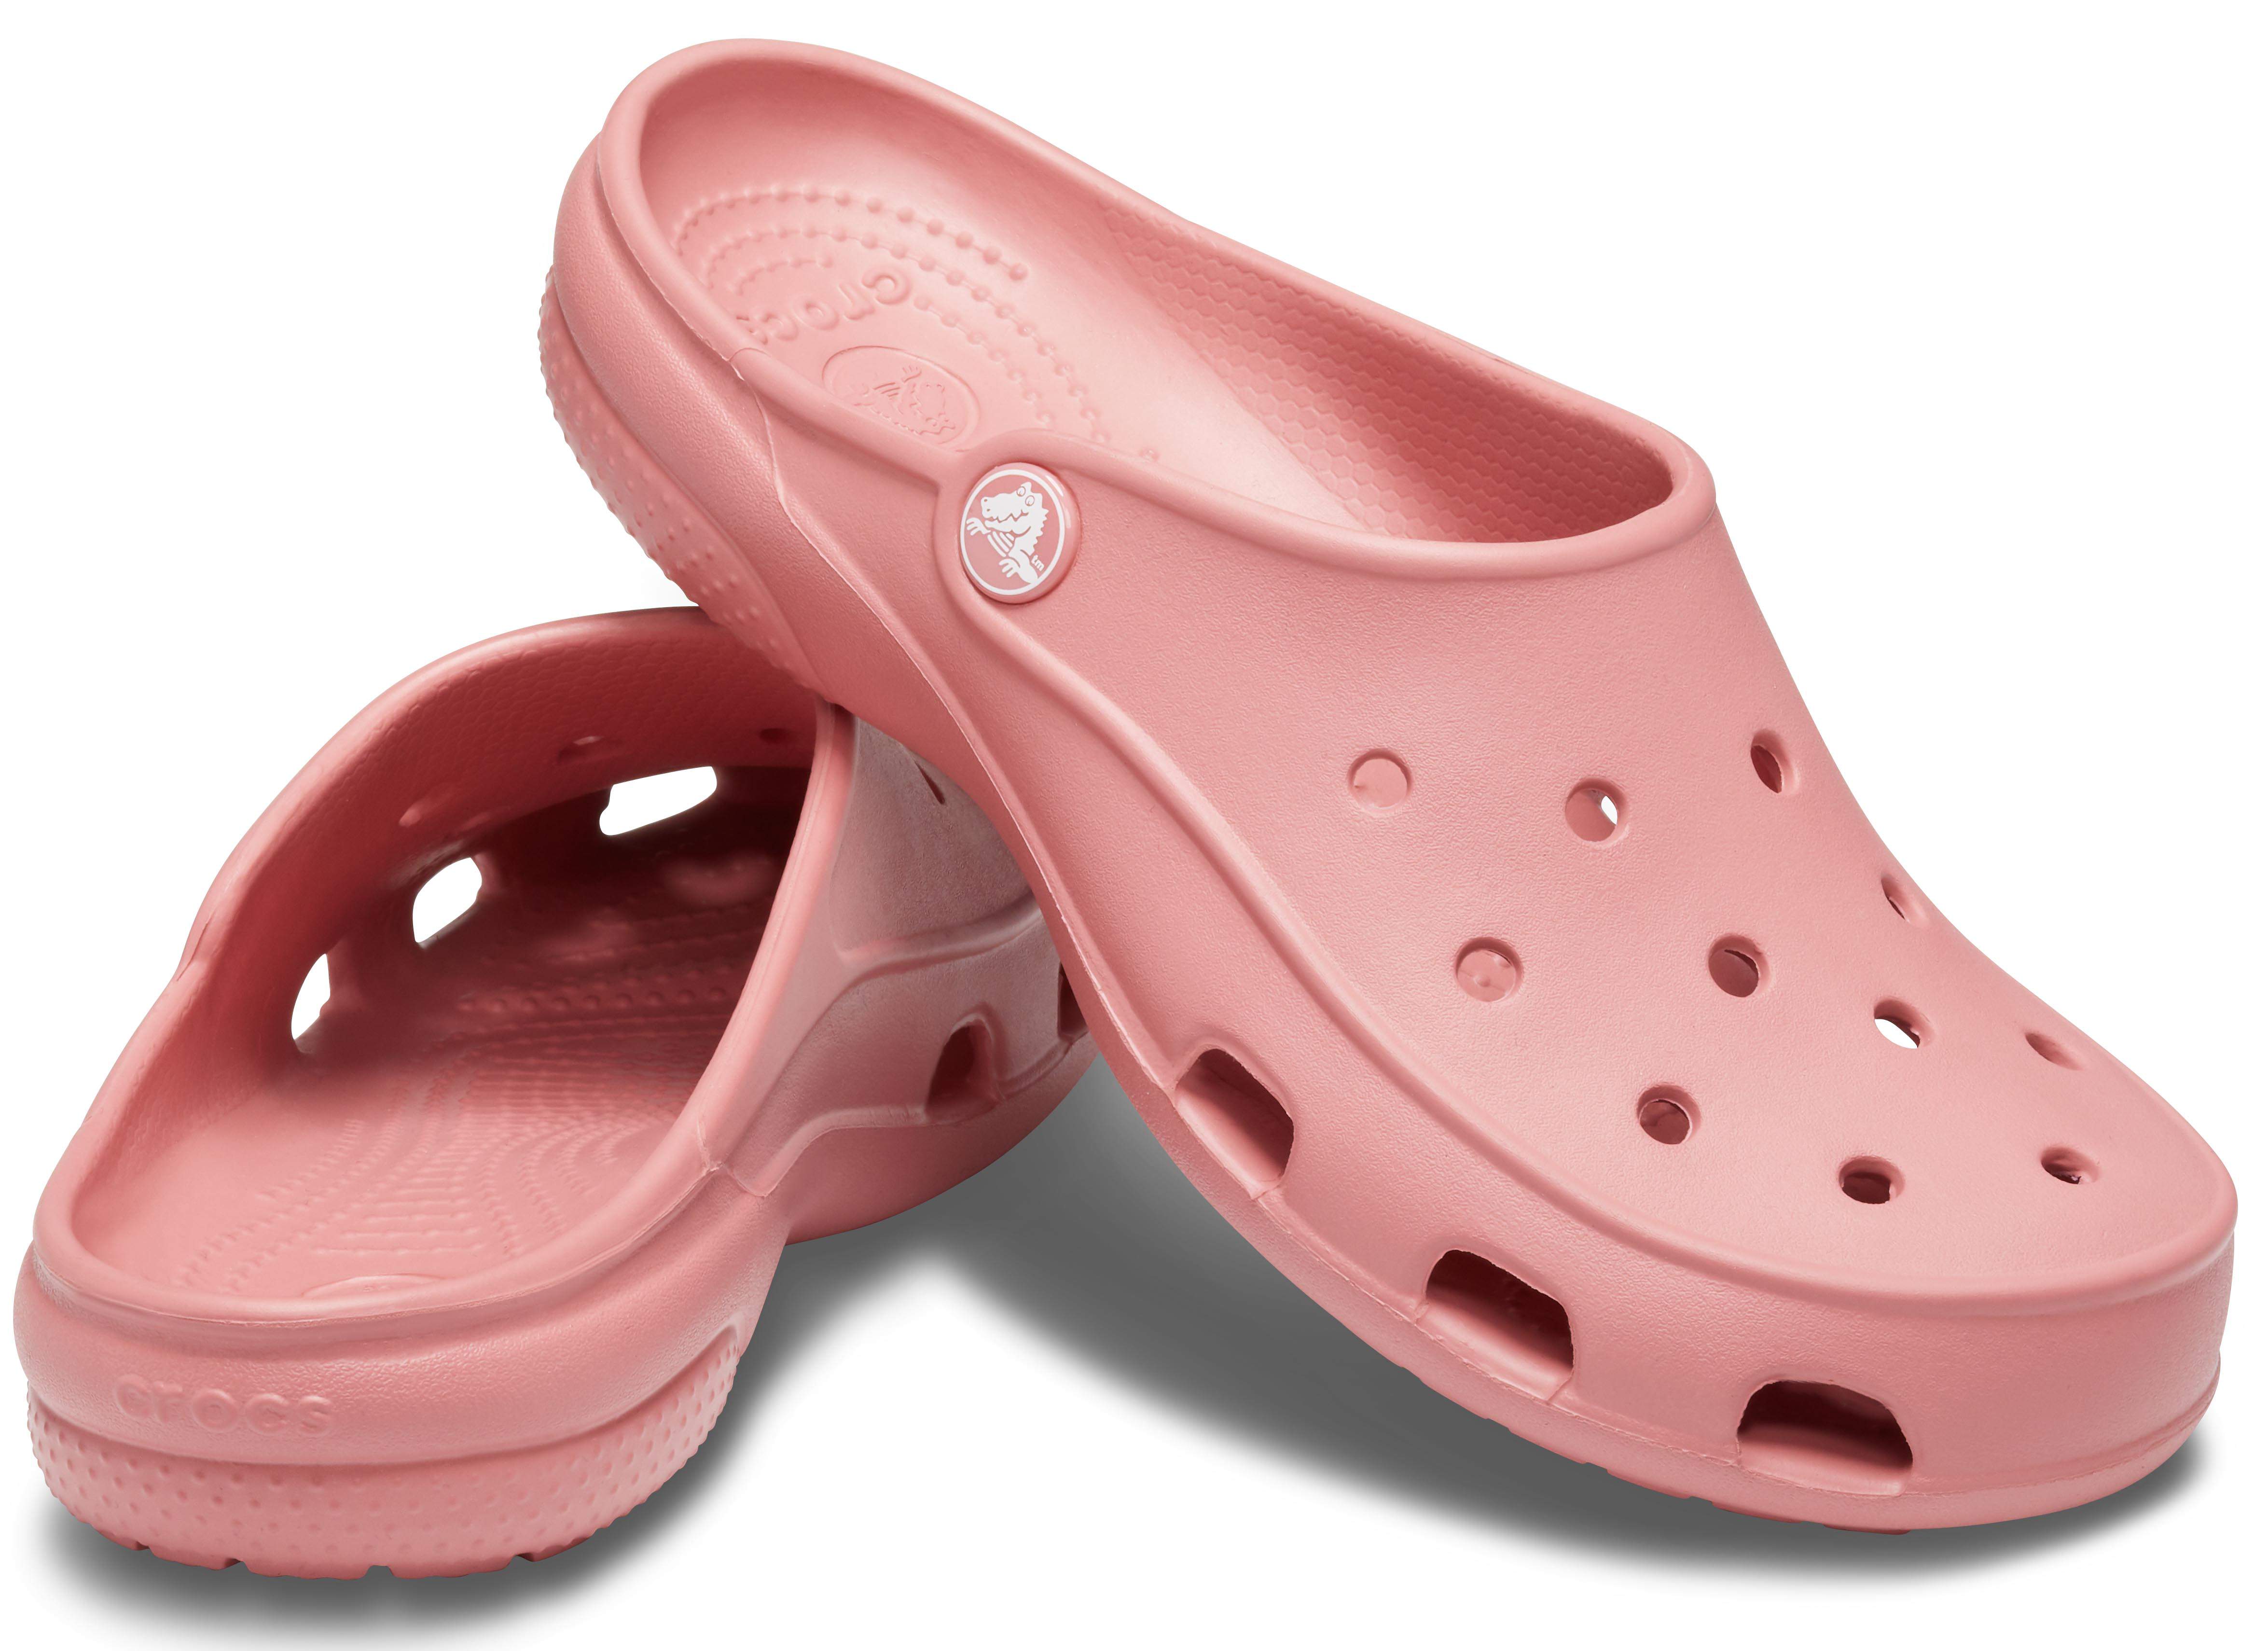 best shoe glue for crocs